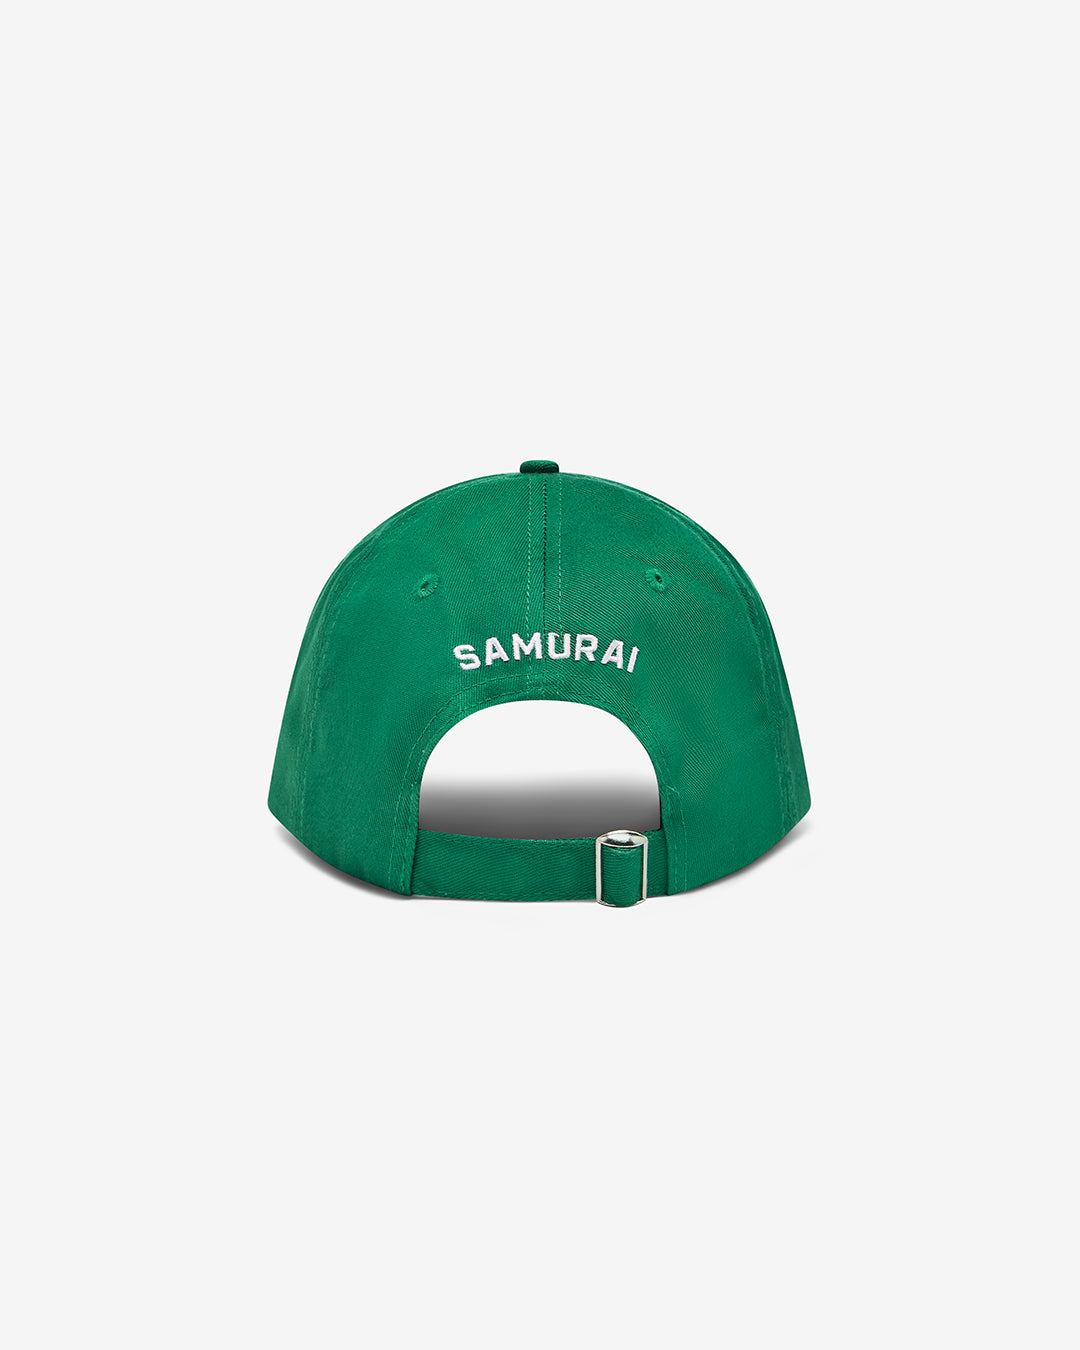 U:0221 - Baseball Cap - Green